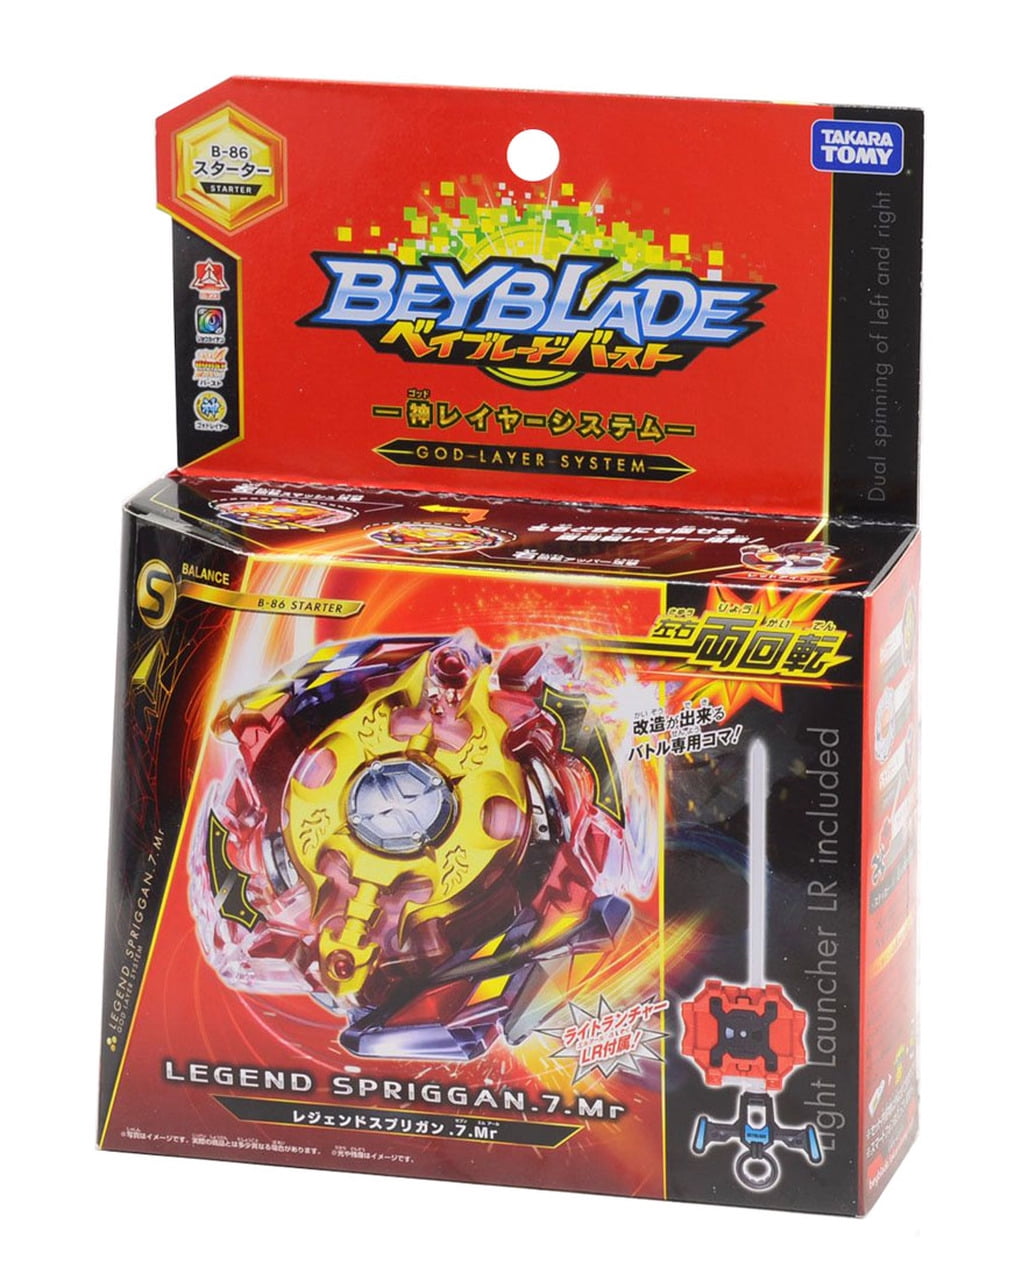 Beyblade Burst B-86 Starter Legend Spriggan.7.Mr Without Launcher Box Toys